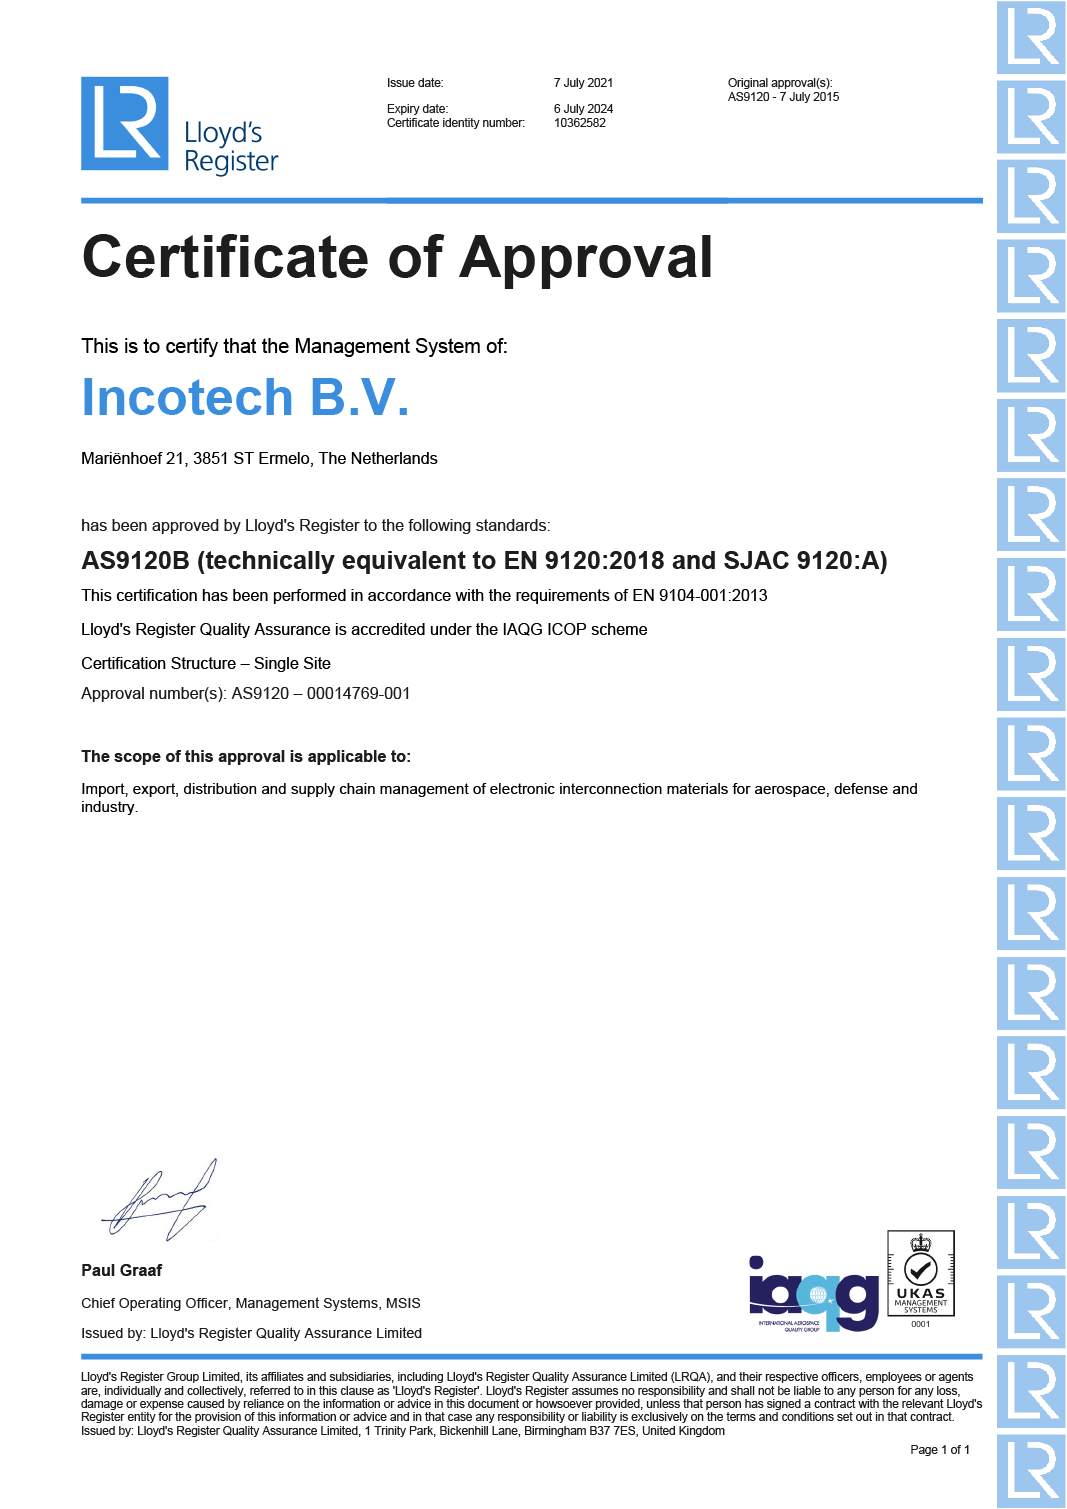 AS-9120 Certificate